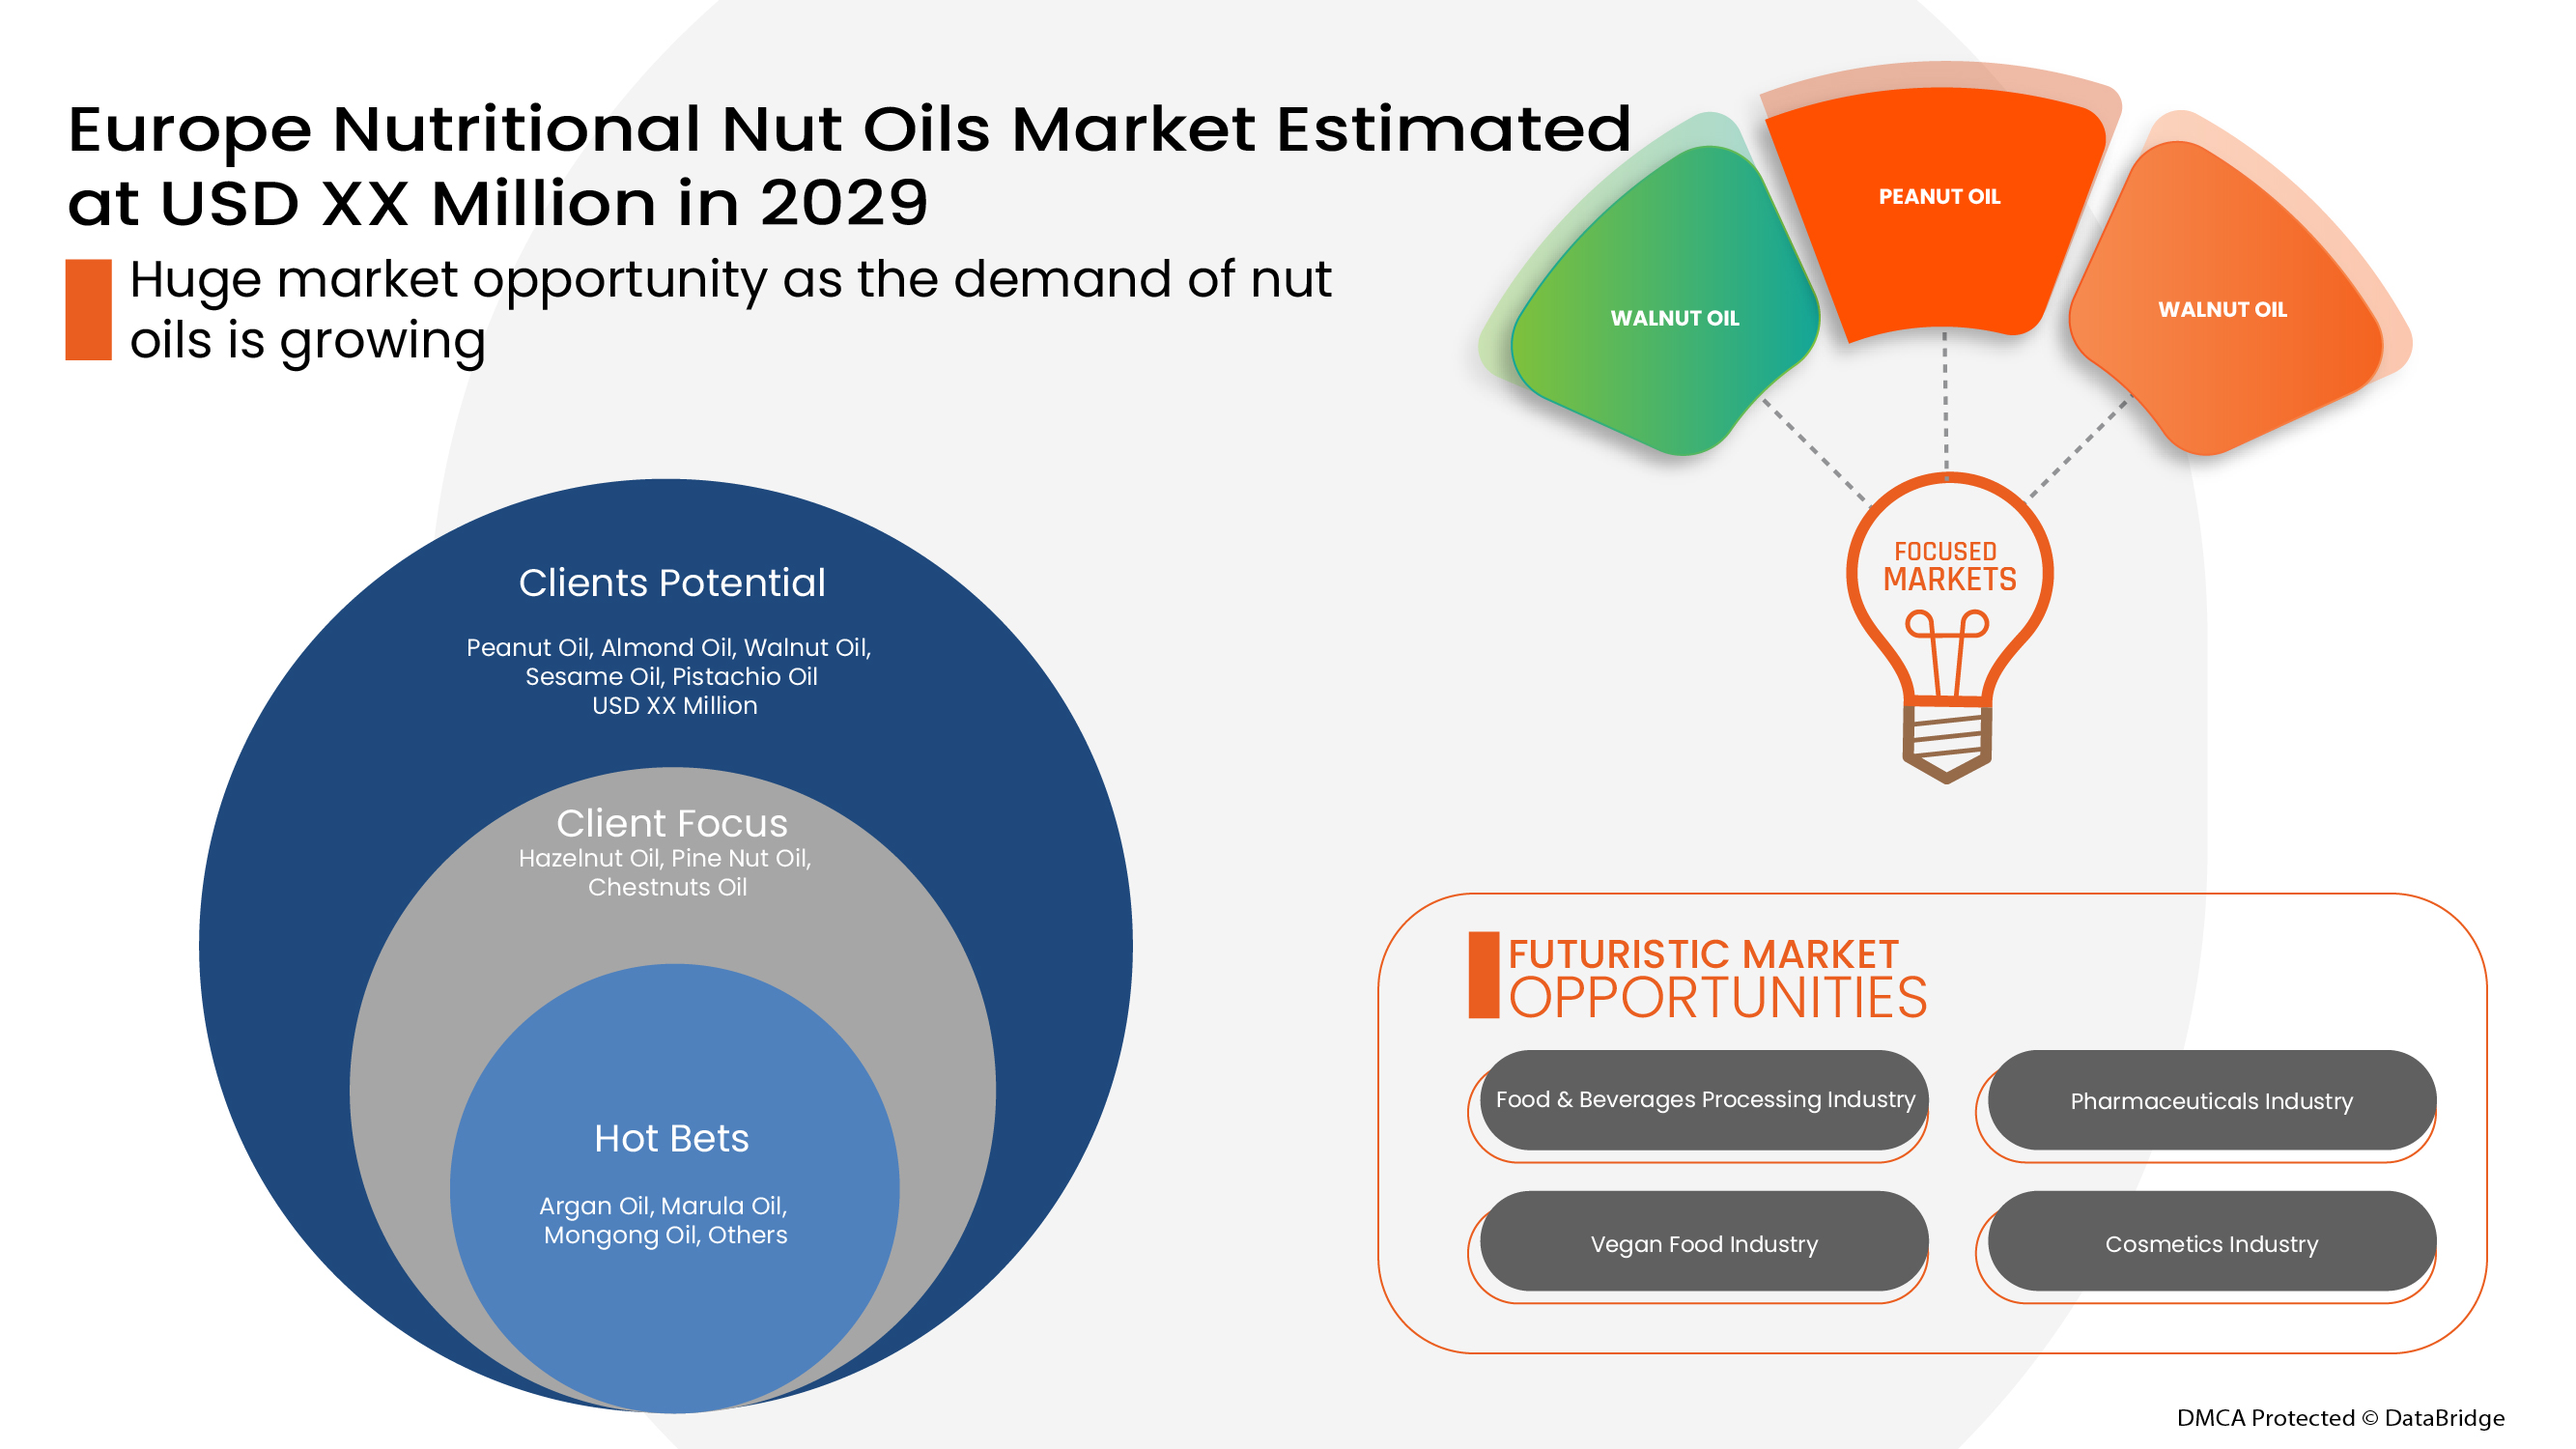 Europe Nutritional Nut Oils Market